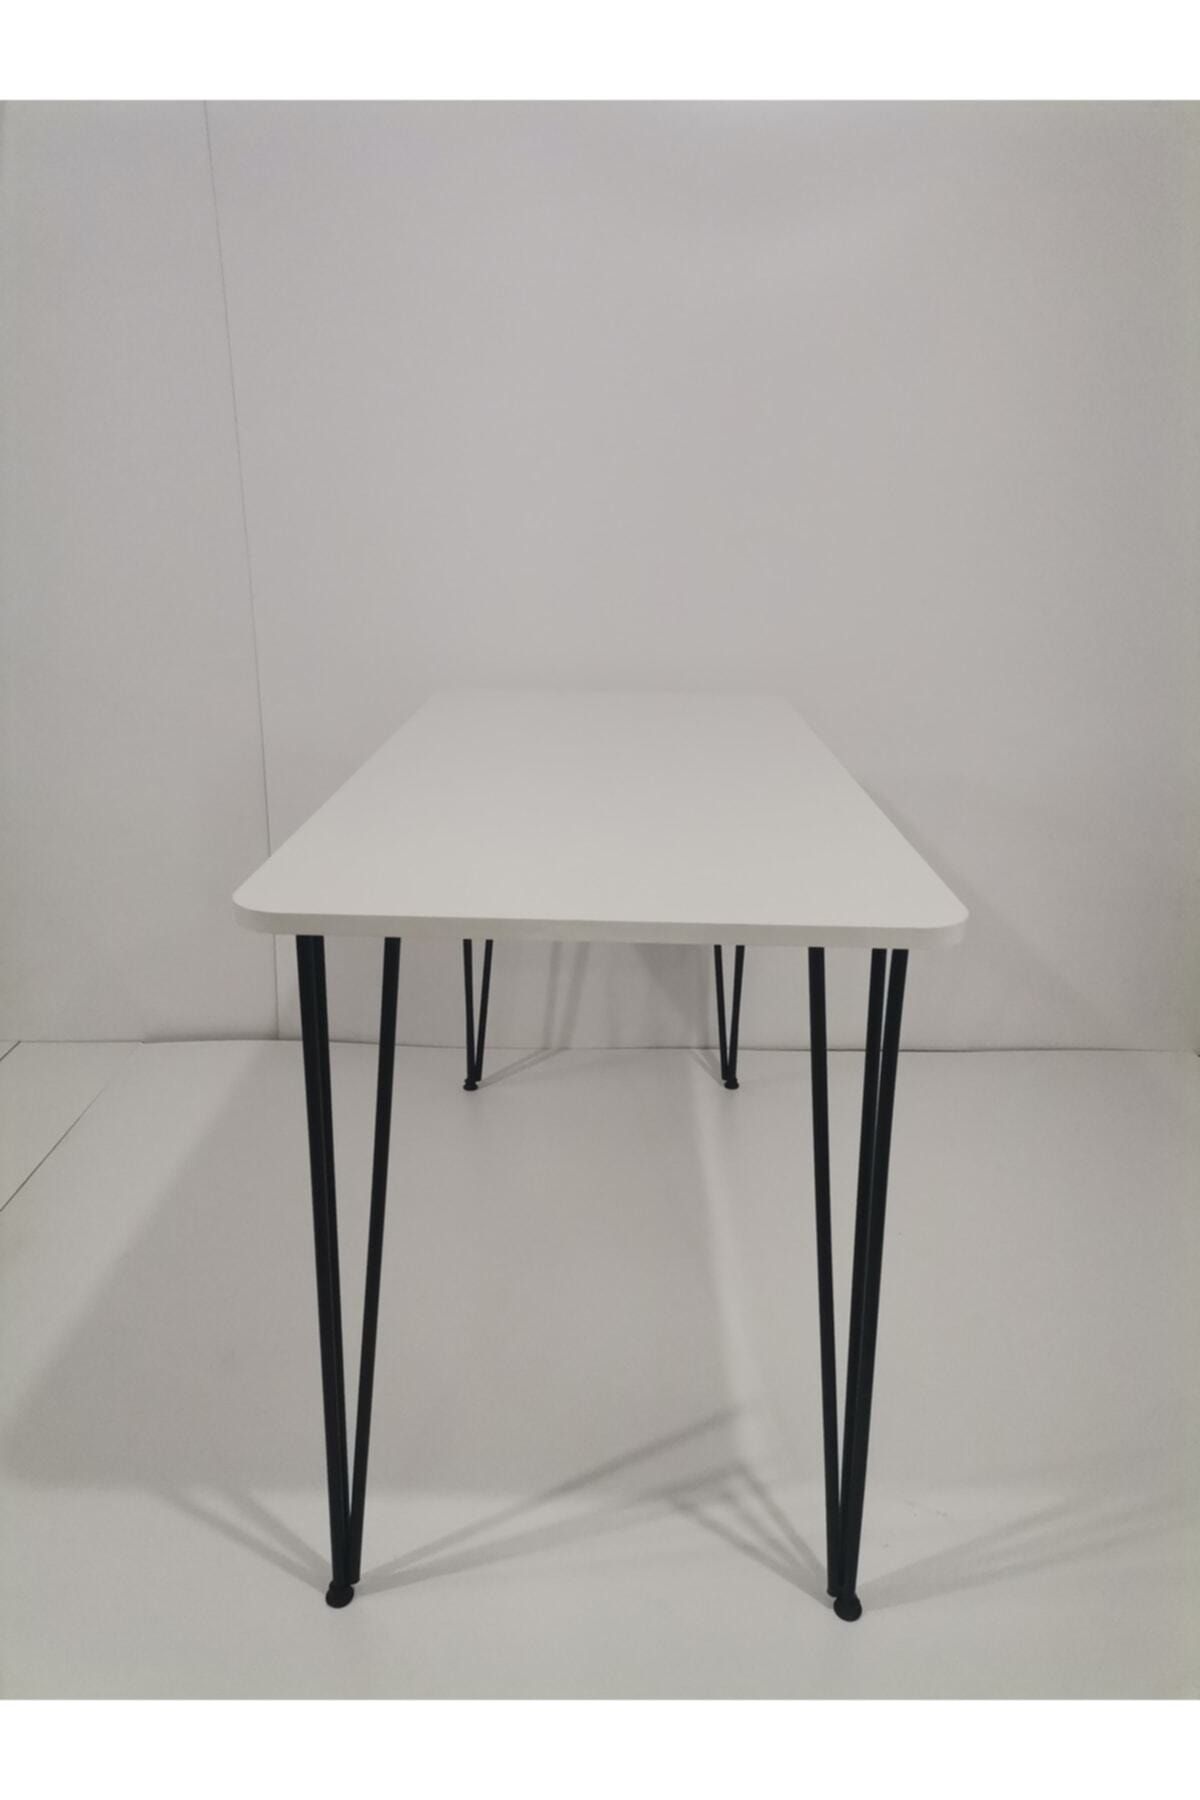 YusGos 60×120 Metal Ayaklı Masa Mutfak Masası Çalışma Masası Bilgisayar Masası